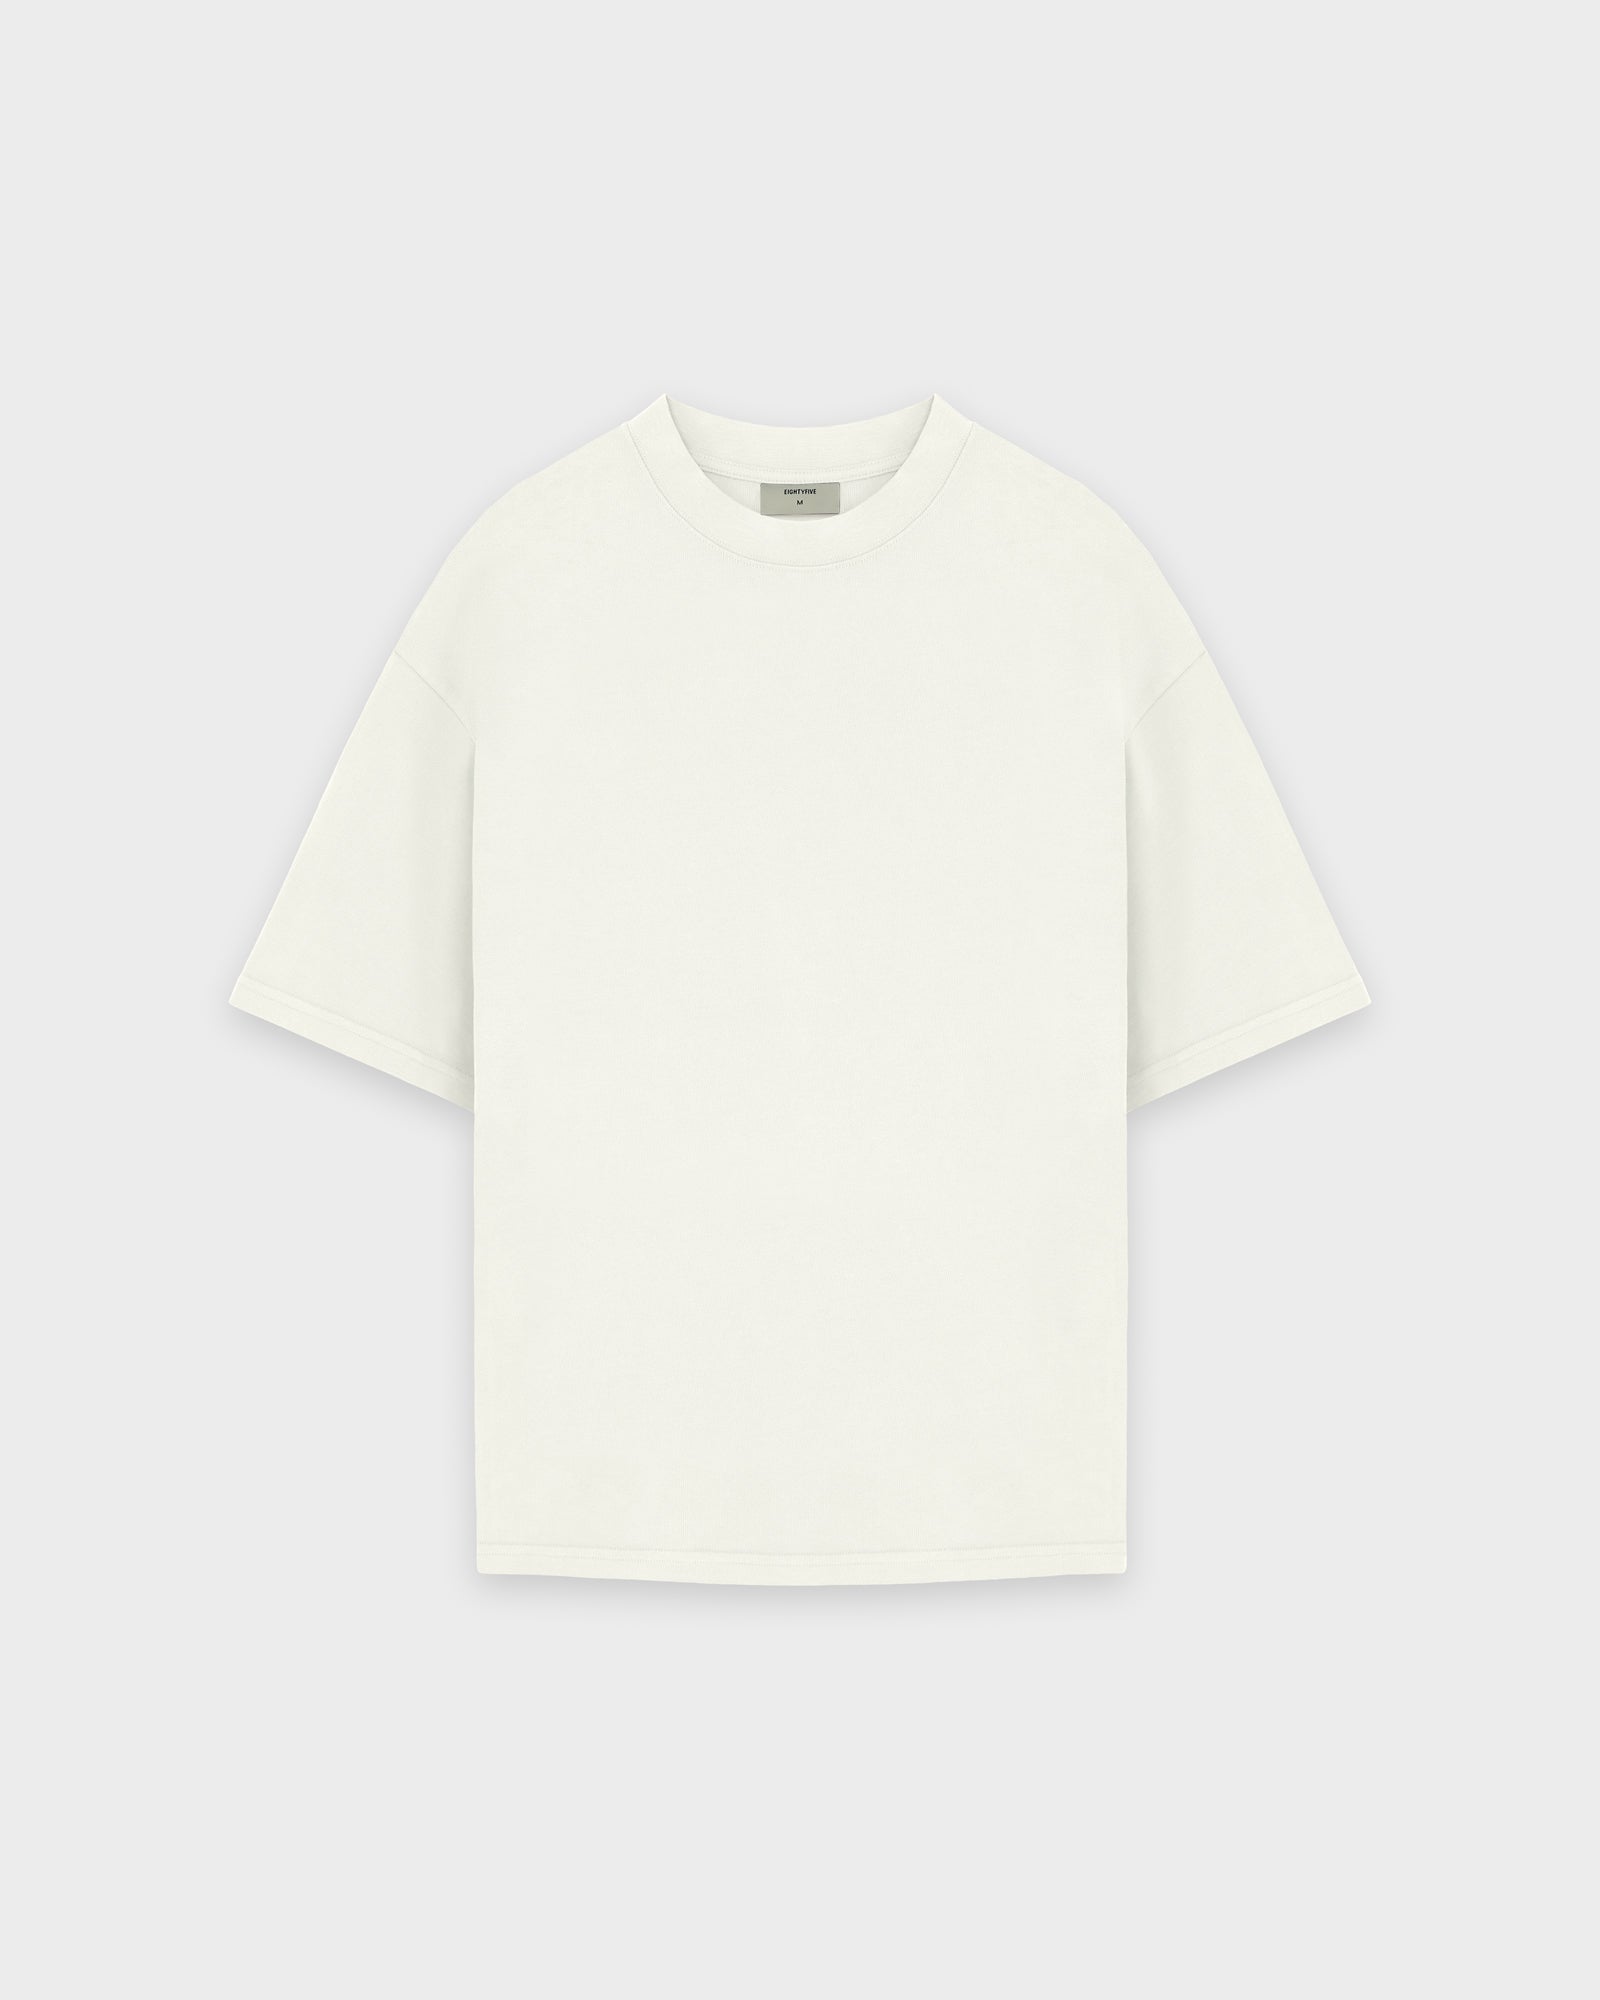 Heavy Off White Basic T-Shirt